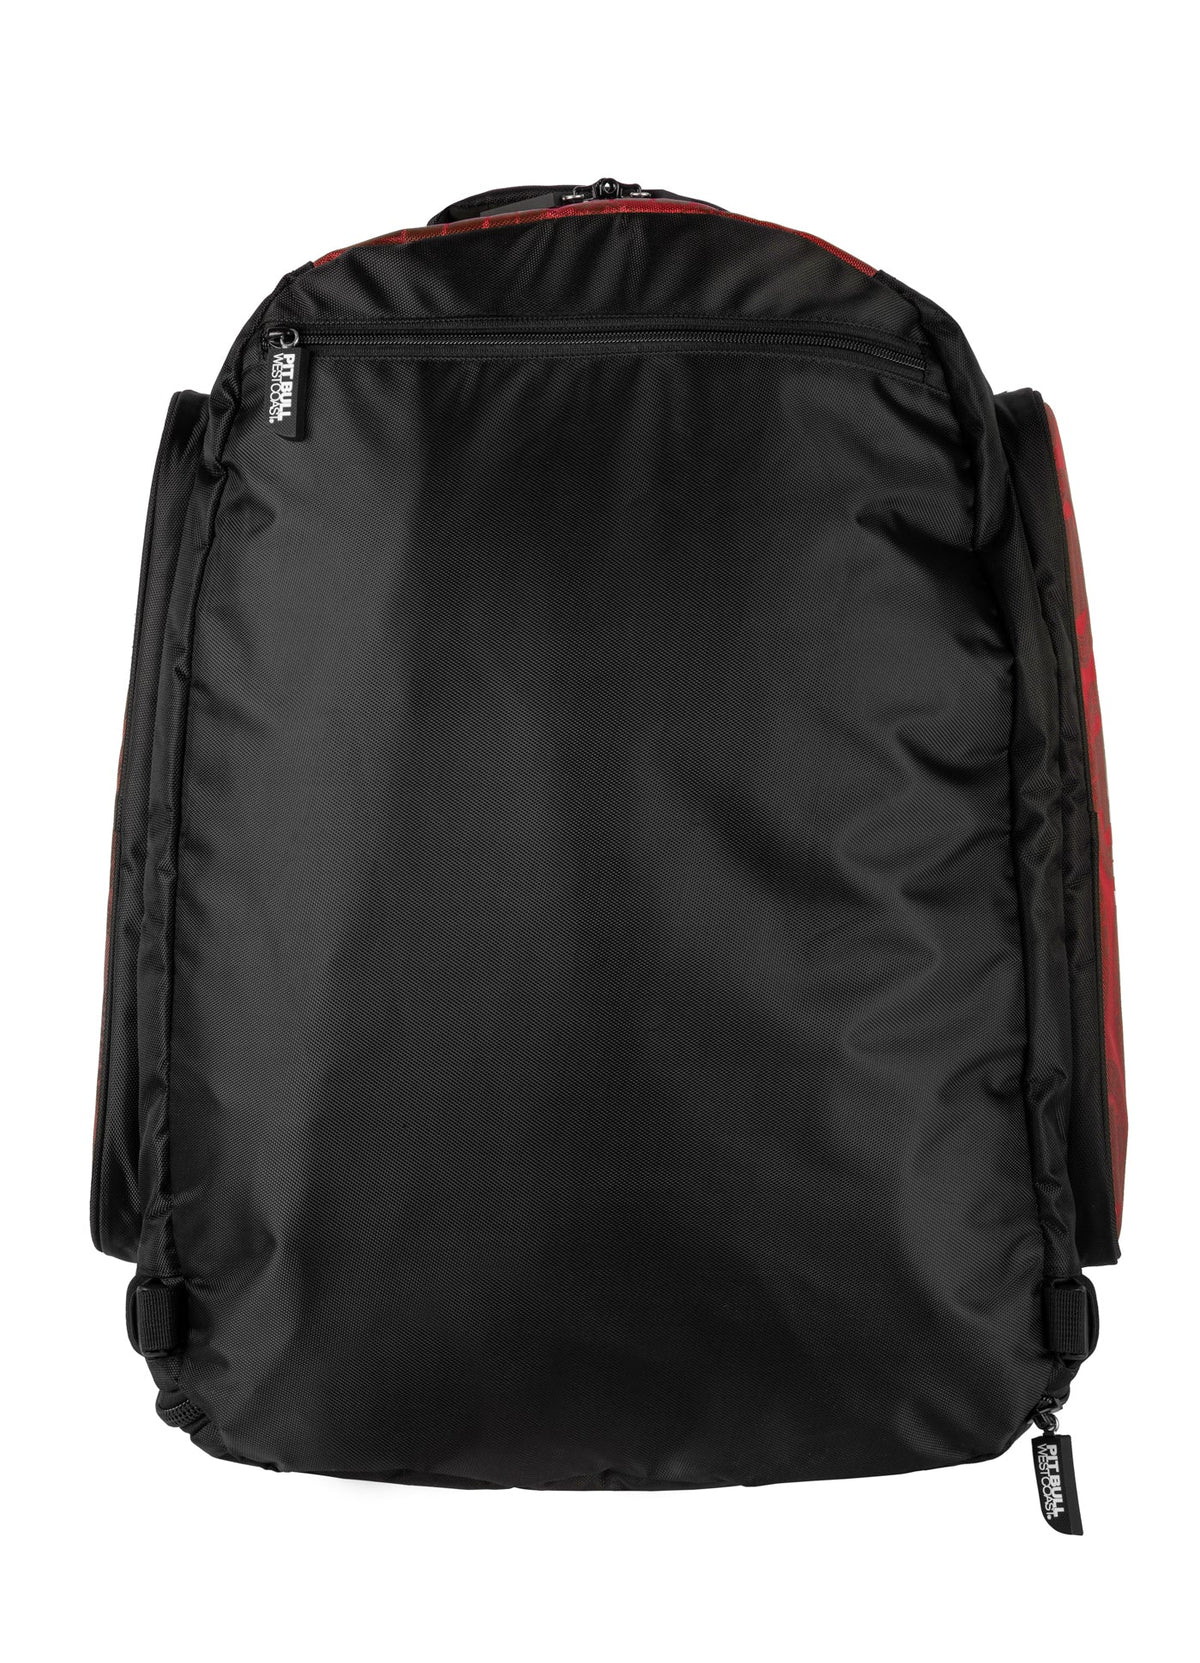 LOGO Big Red Training Backpack